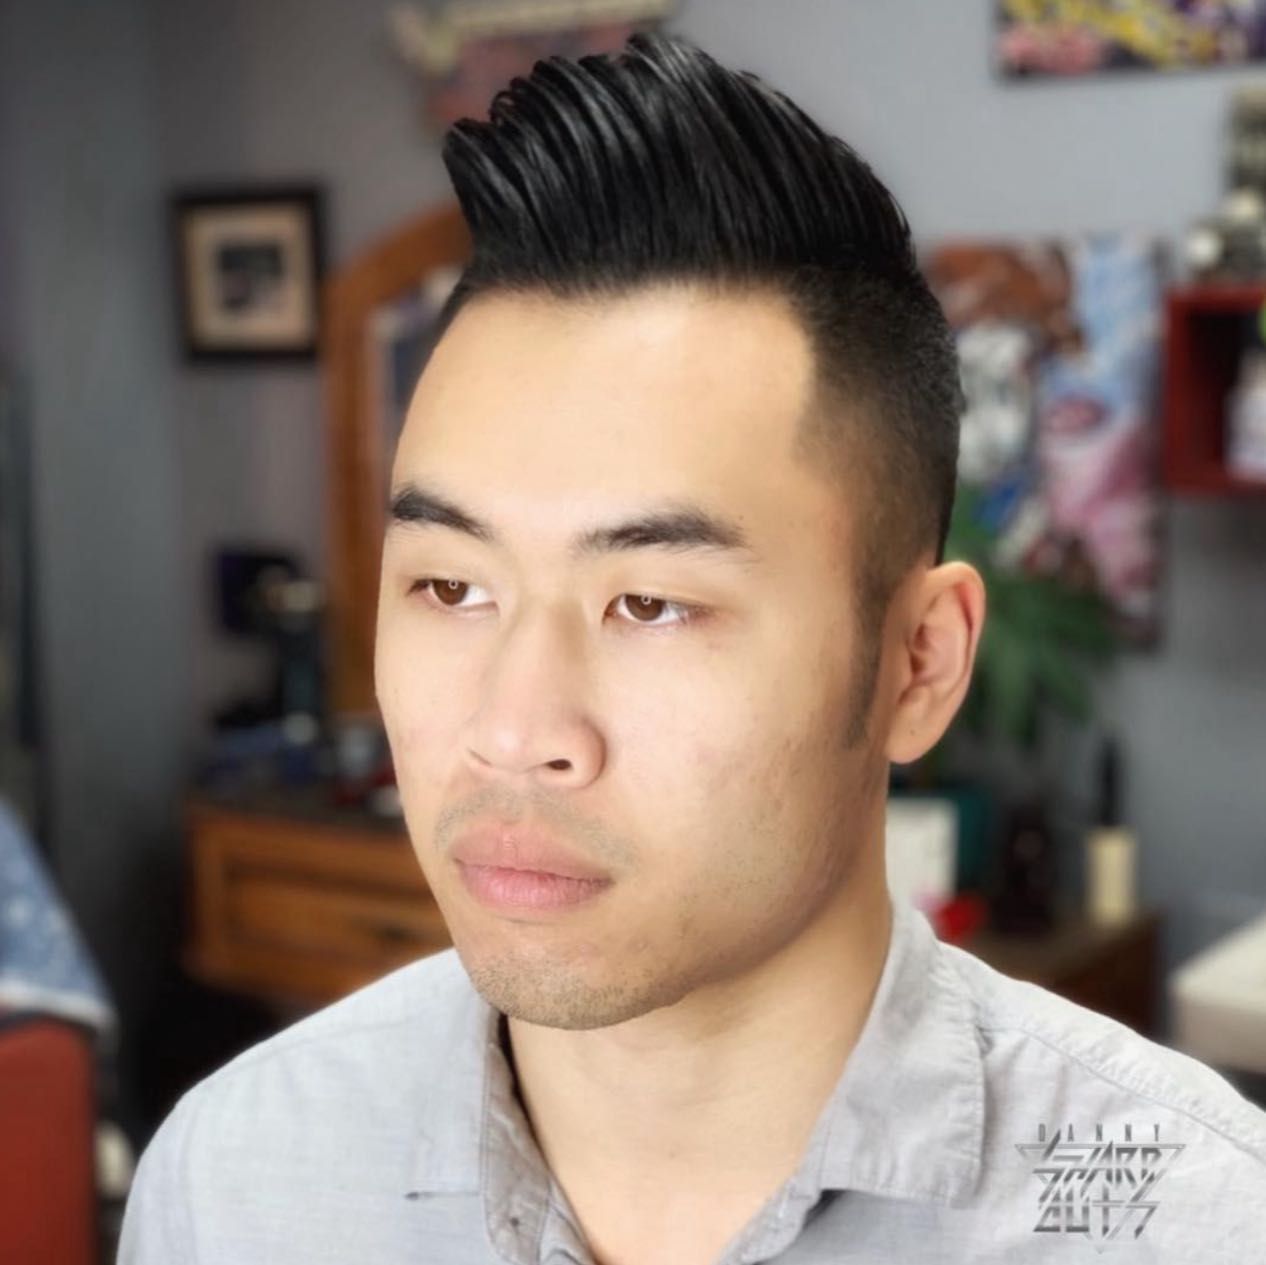 Haircut With Danny portfolio